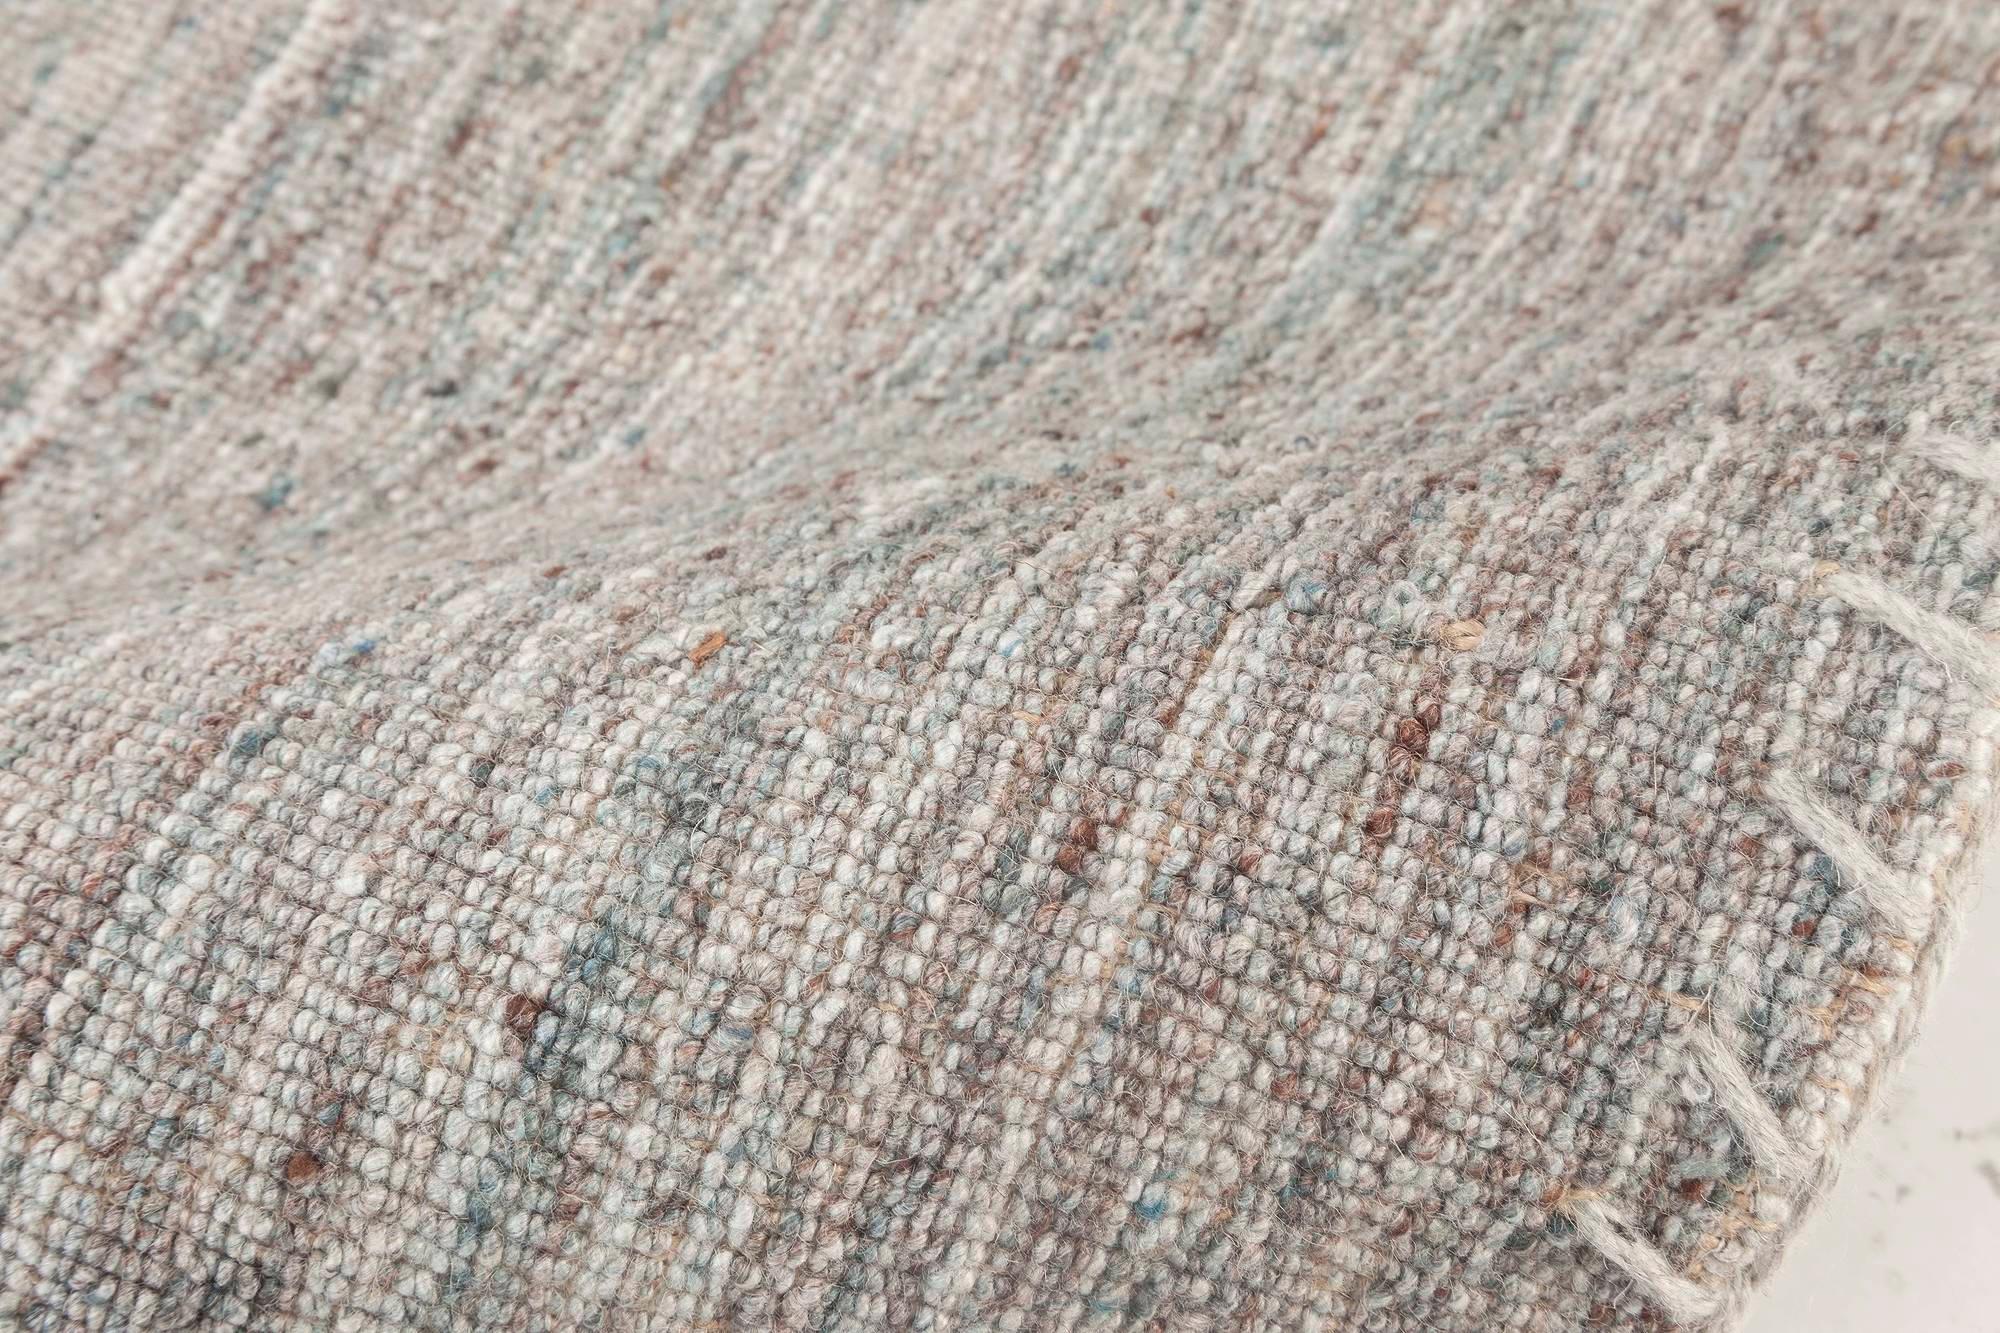 Bauer Collection Modern grey Pattern-less rug by Doris Leslie Blau.
Size: 6'7